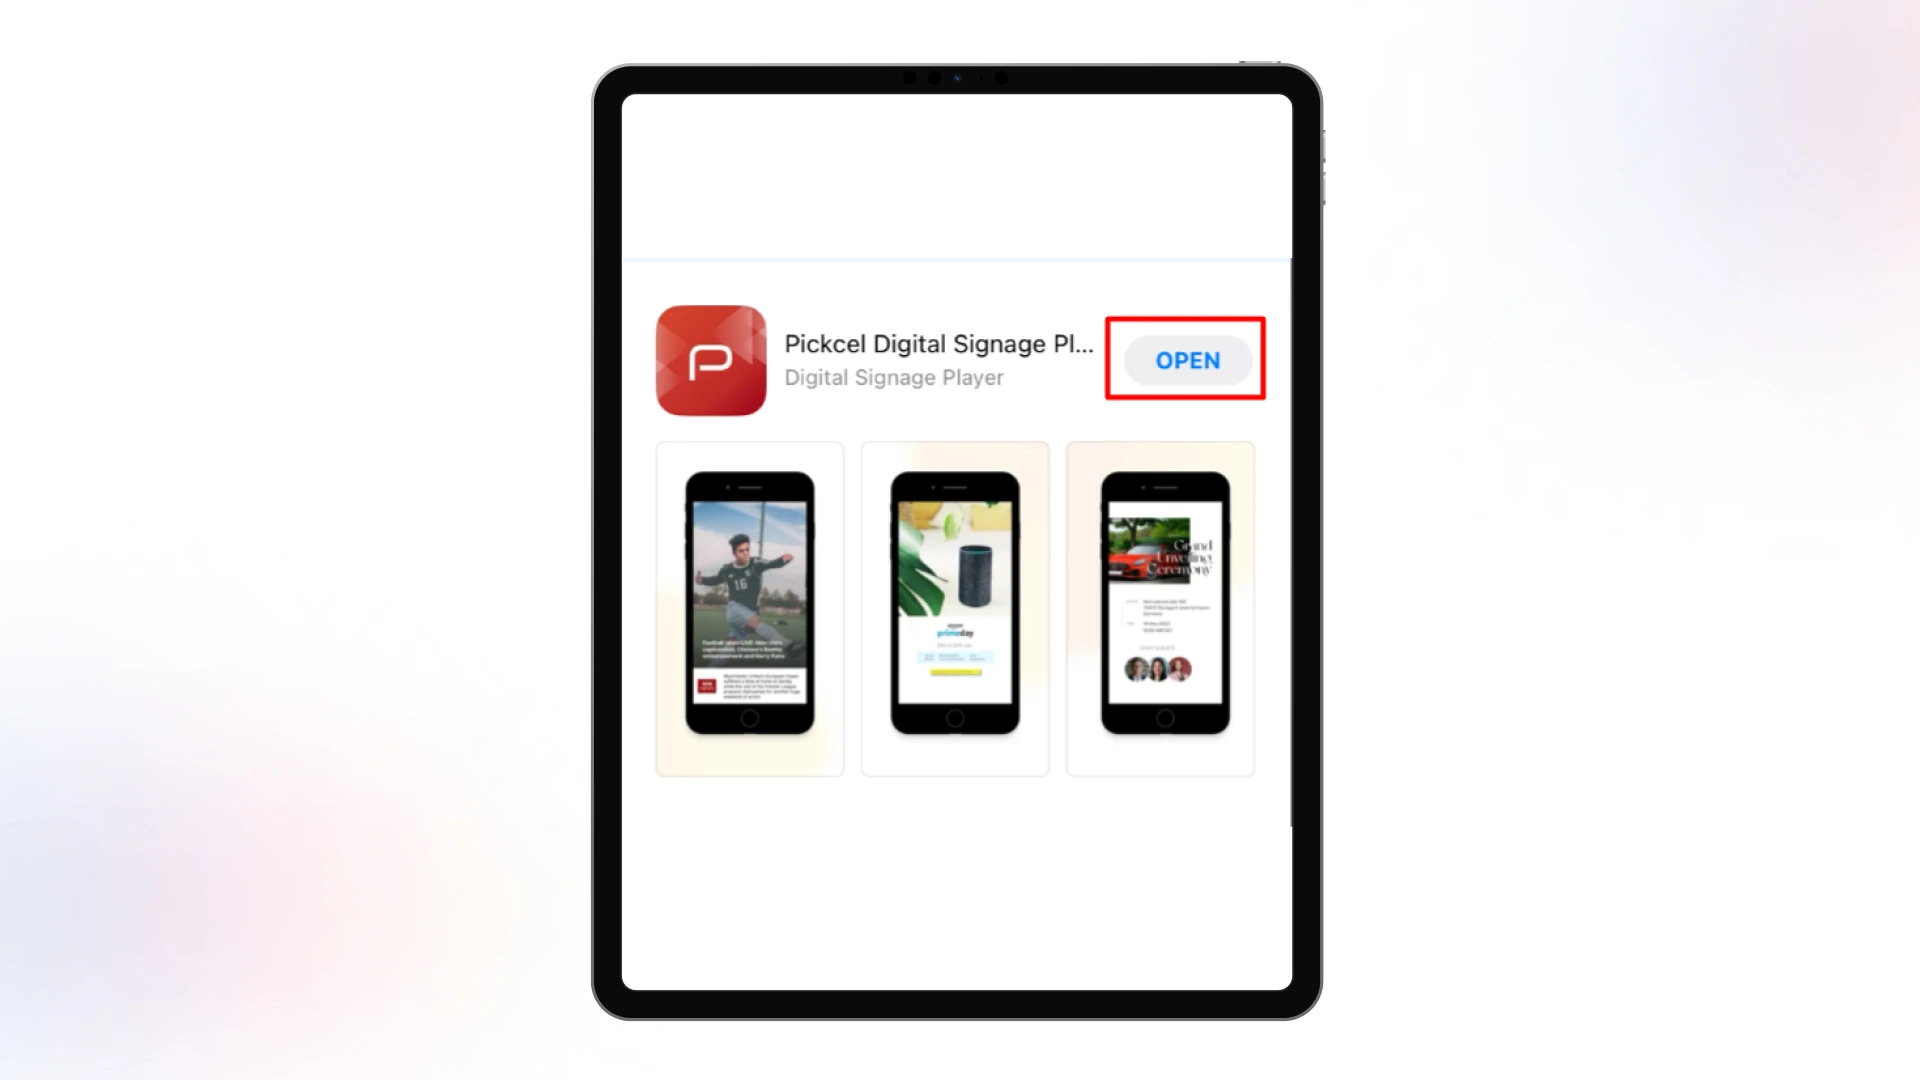 Pickcel App is now downloaded on the iPad File: Pickcel-App-download-success-indicator